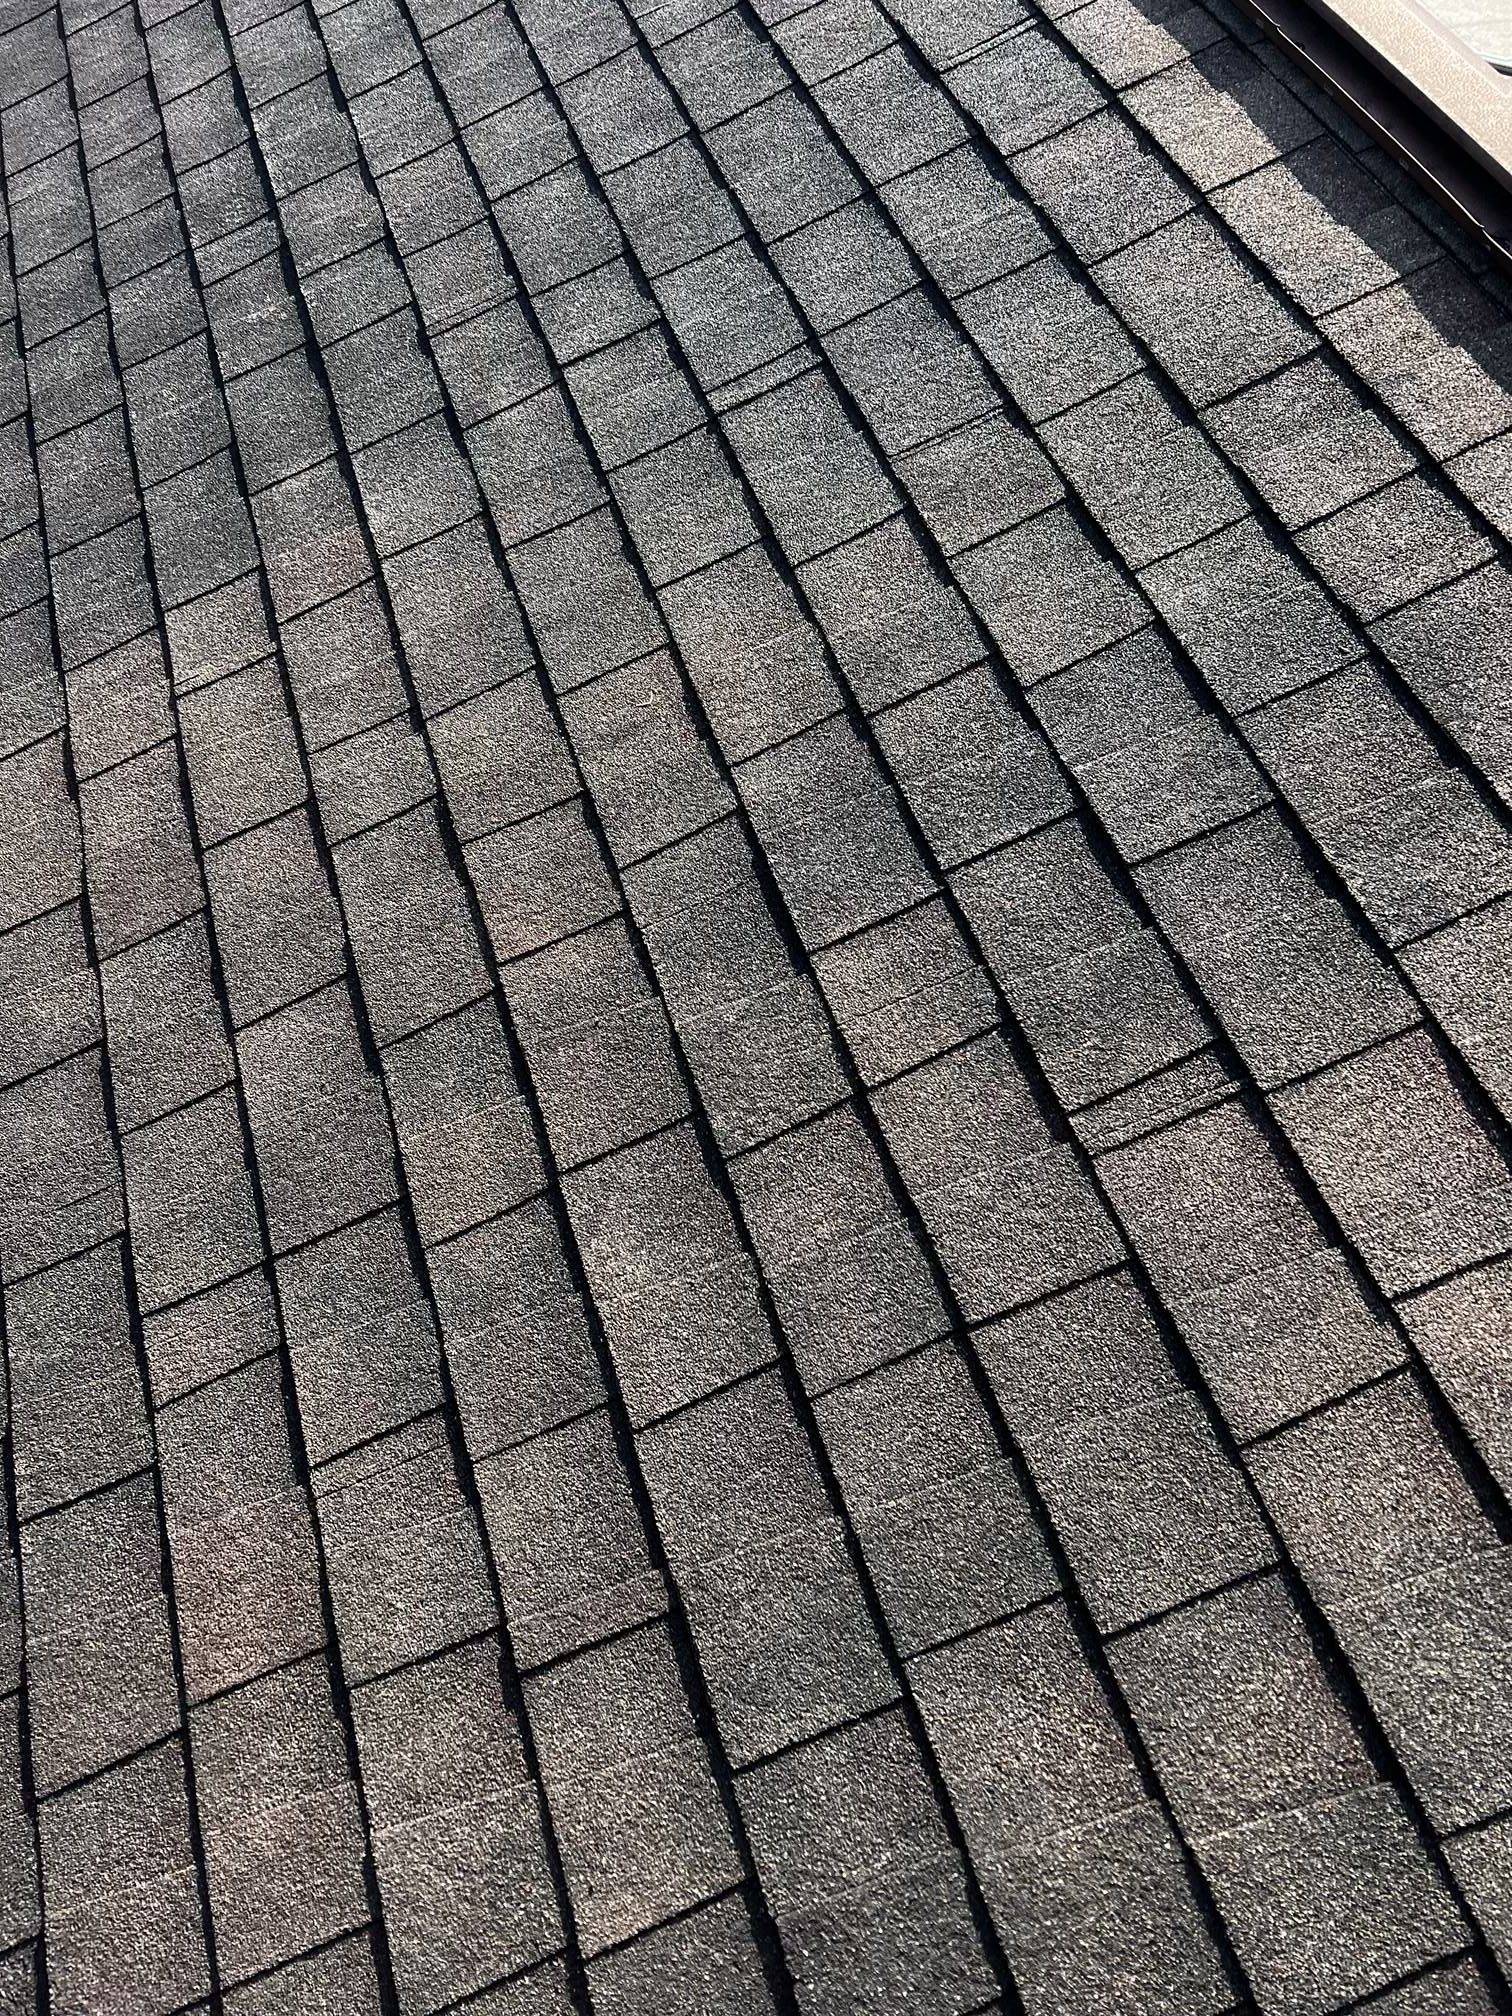 roof shingle